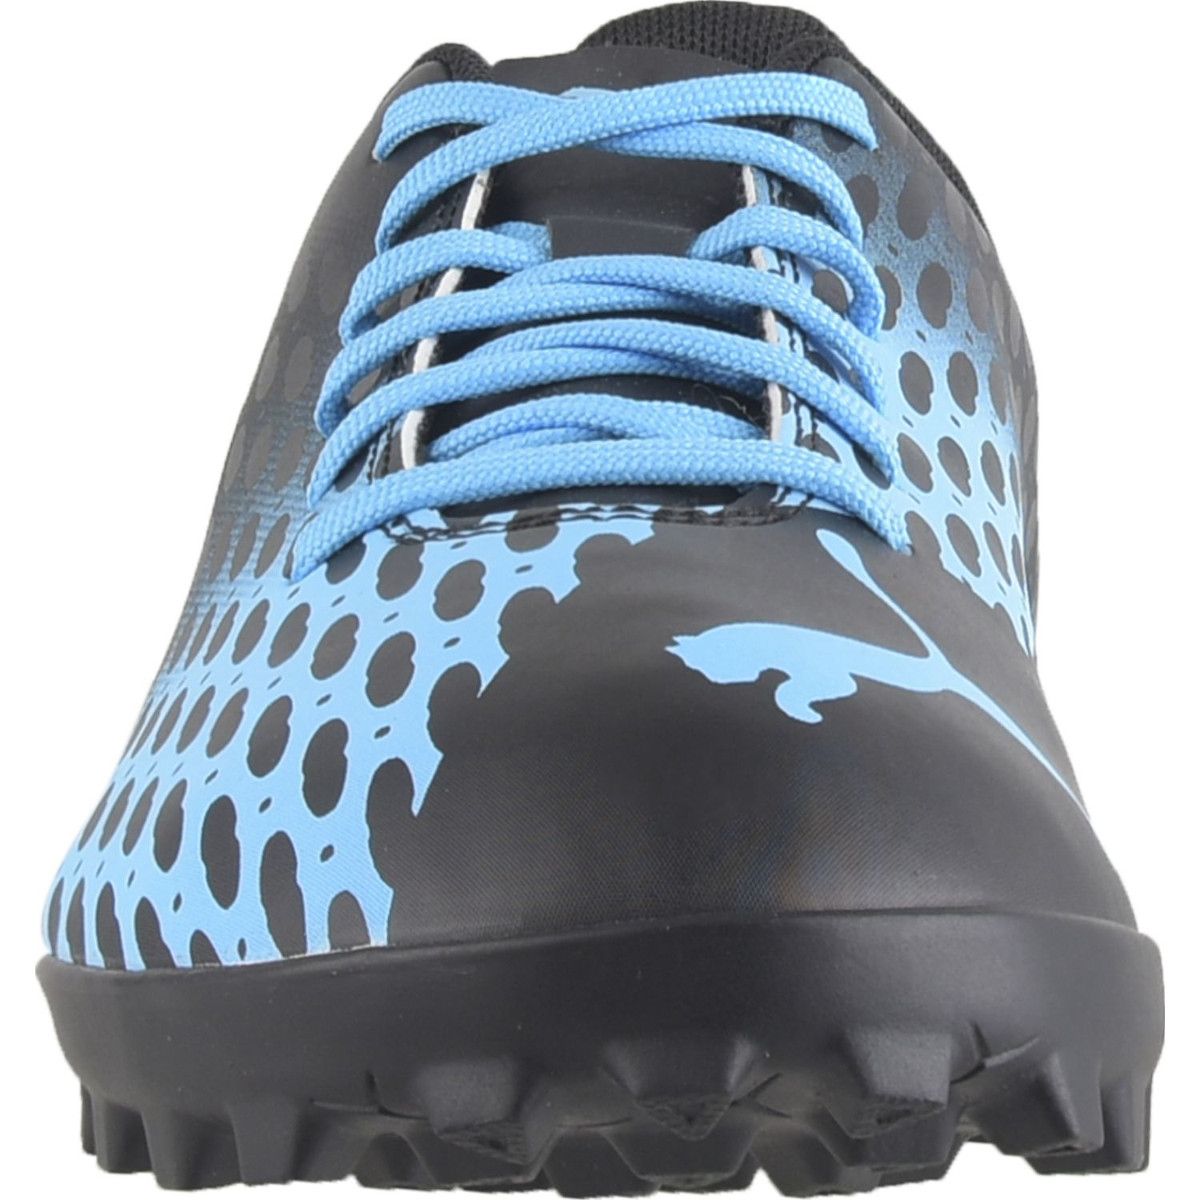 Puma Spirit III TT Men's Football Shoes 106068-02